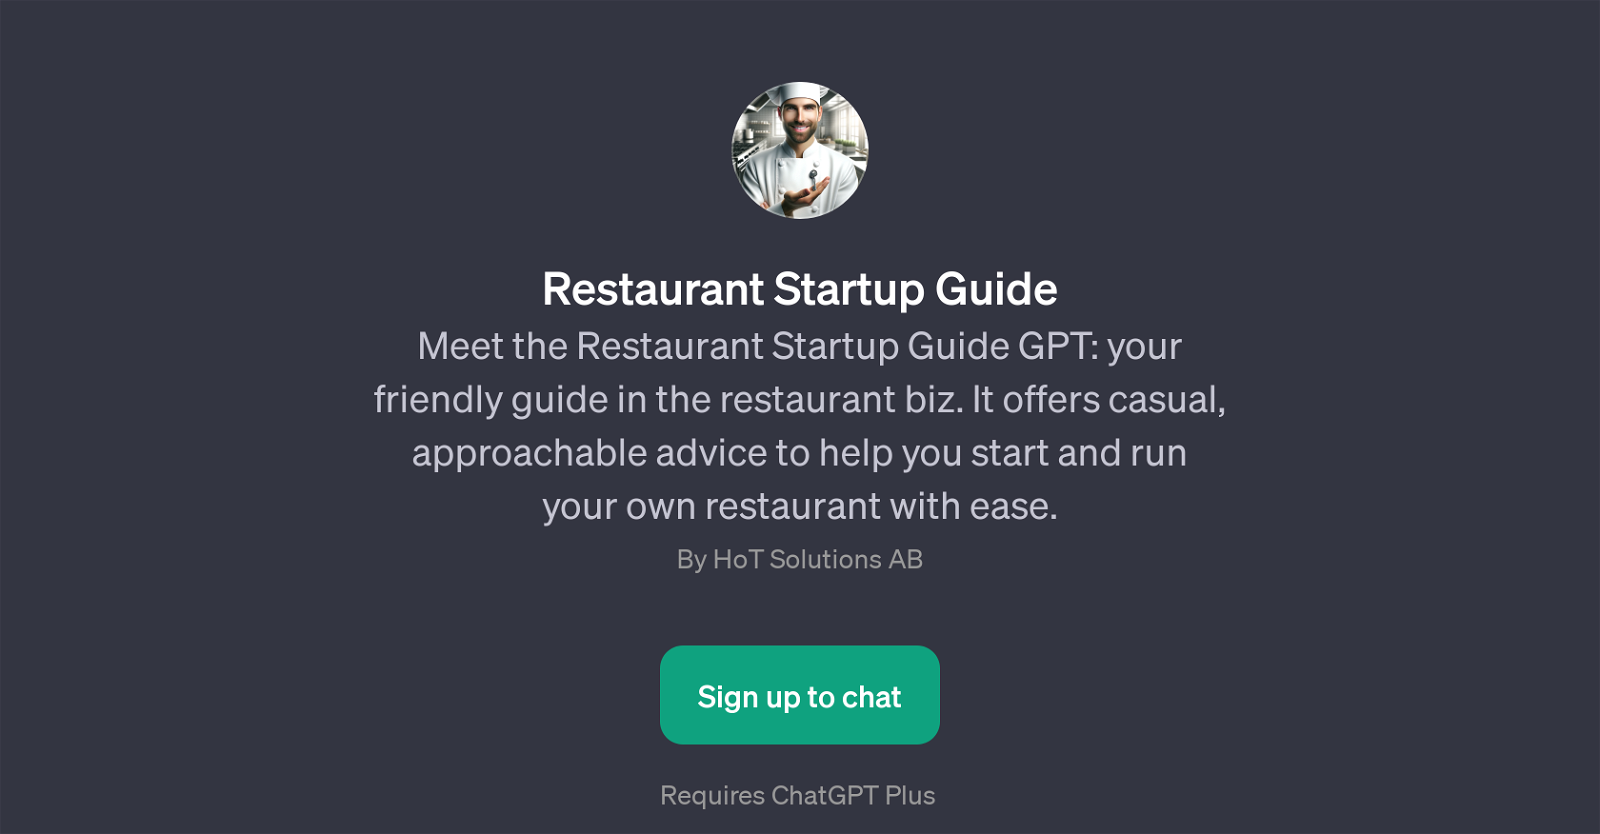 Restaurant Startup Guide GPT website